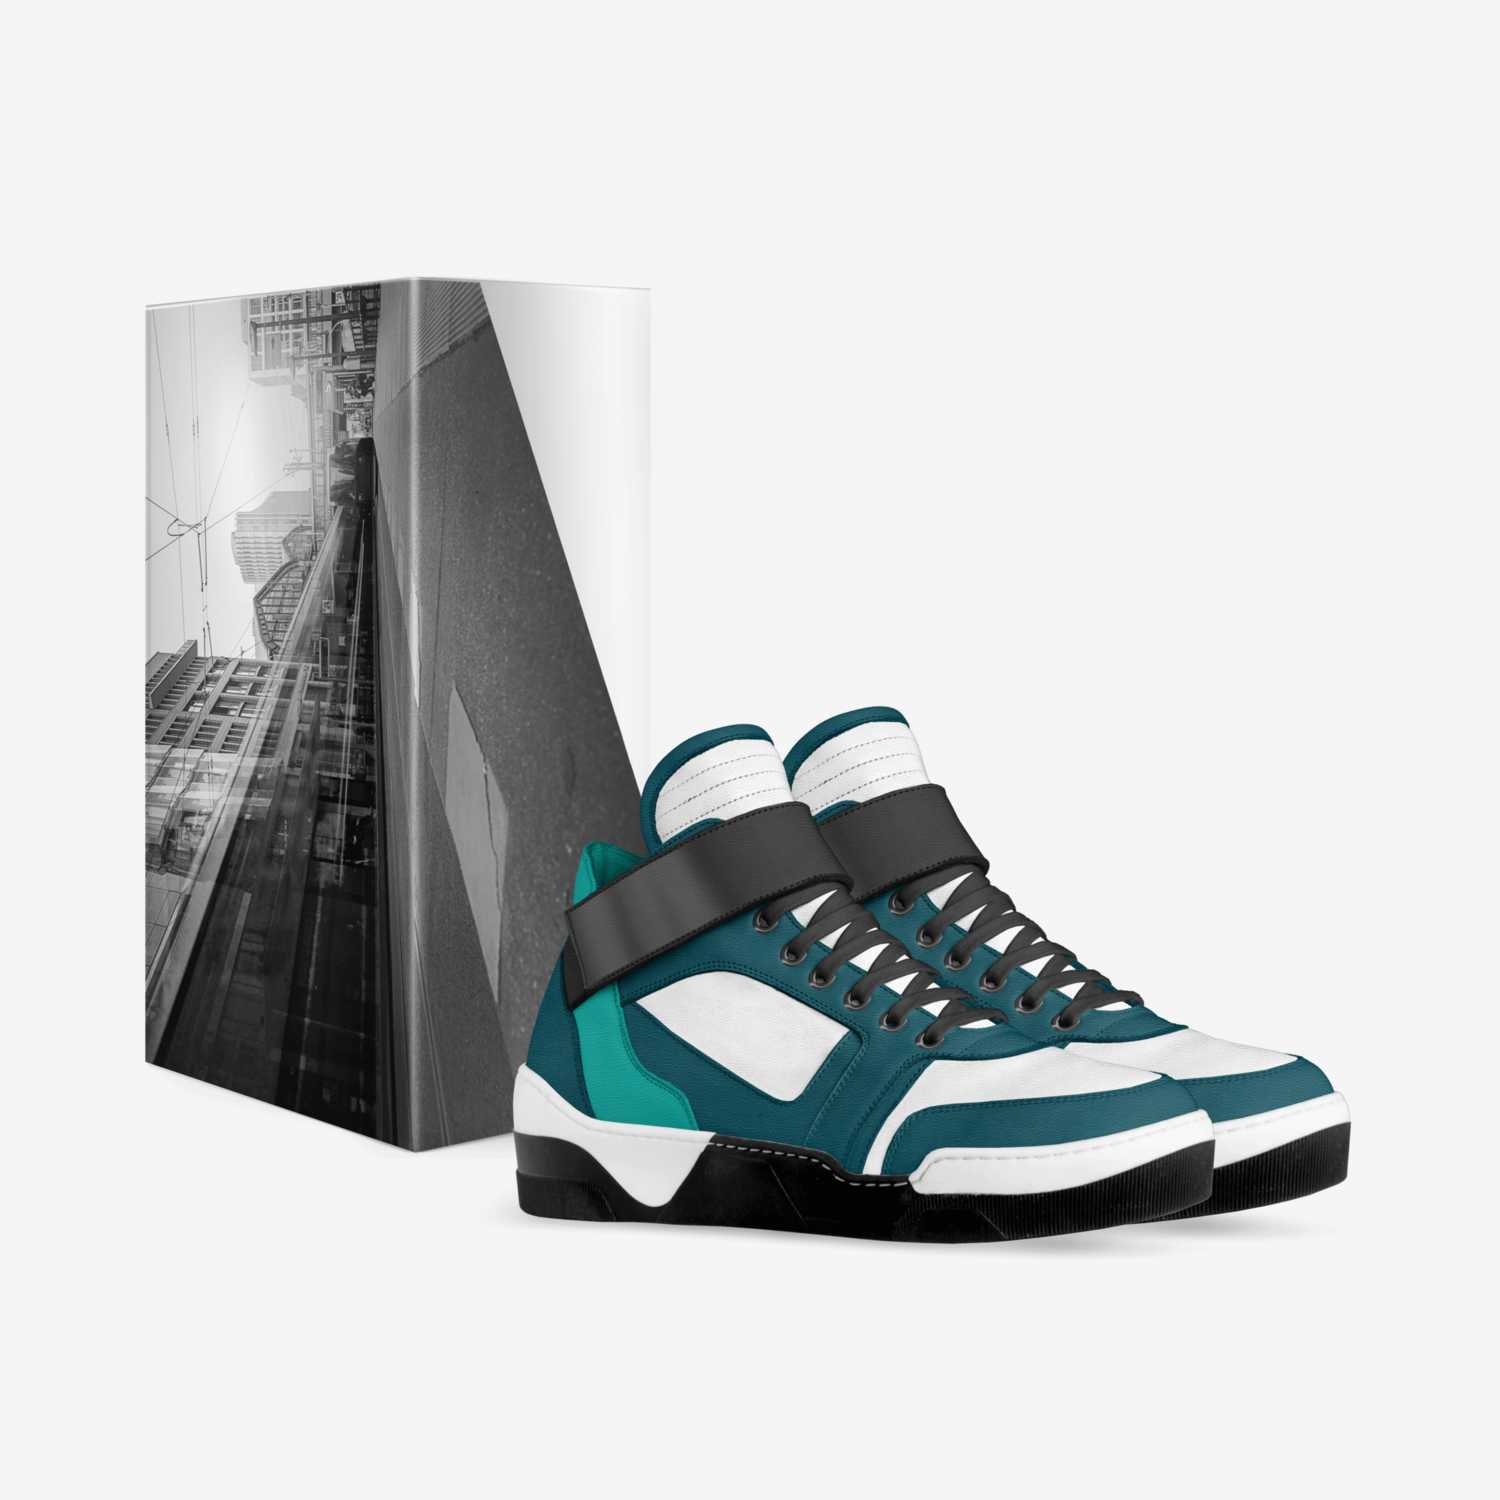 X2U custom made in Italy shoes by Cheyenne Veninga | Box view